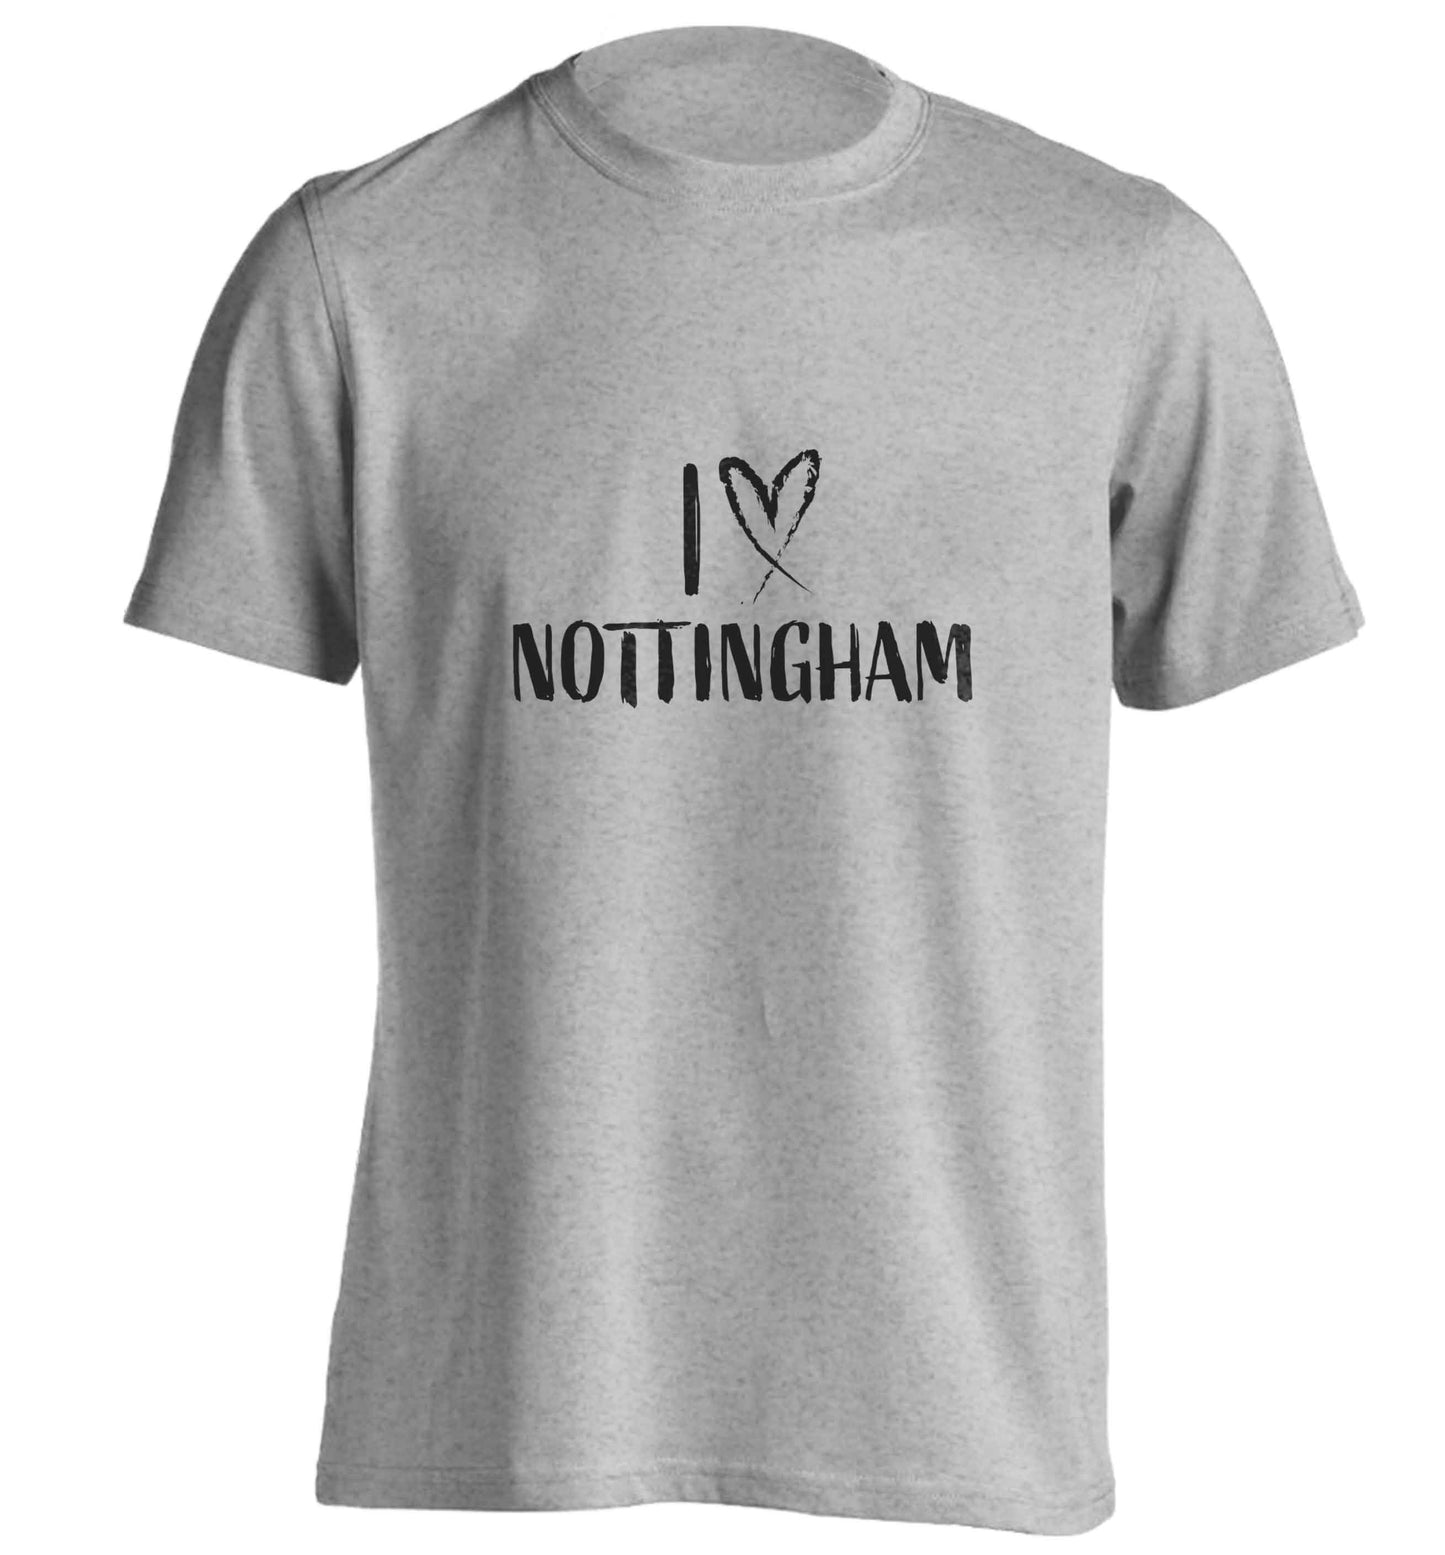 I love Nottingham adults unisex grey Tshirt 2XL